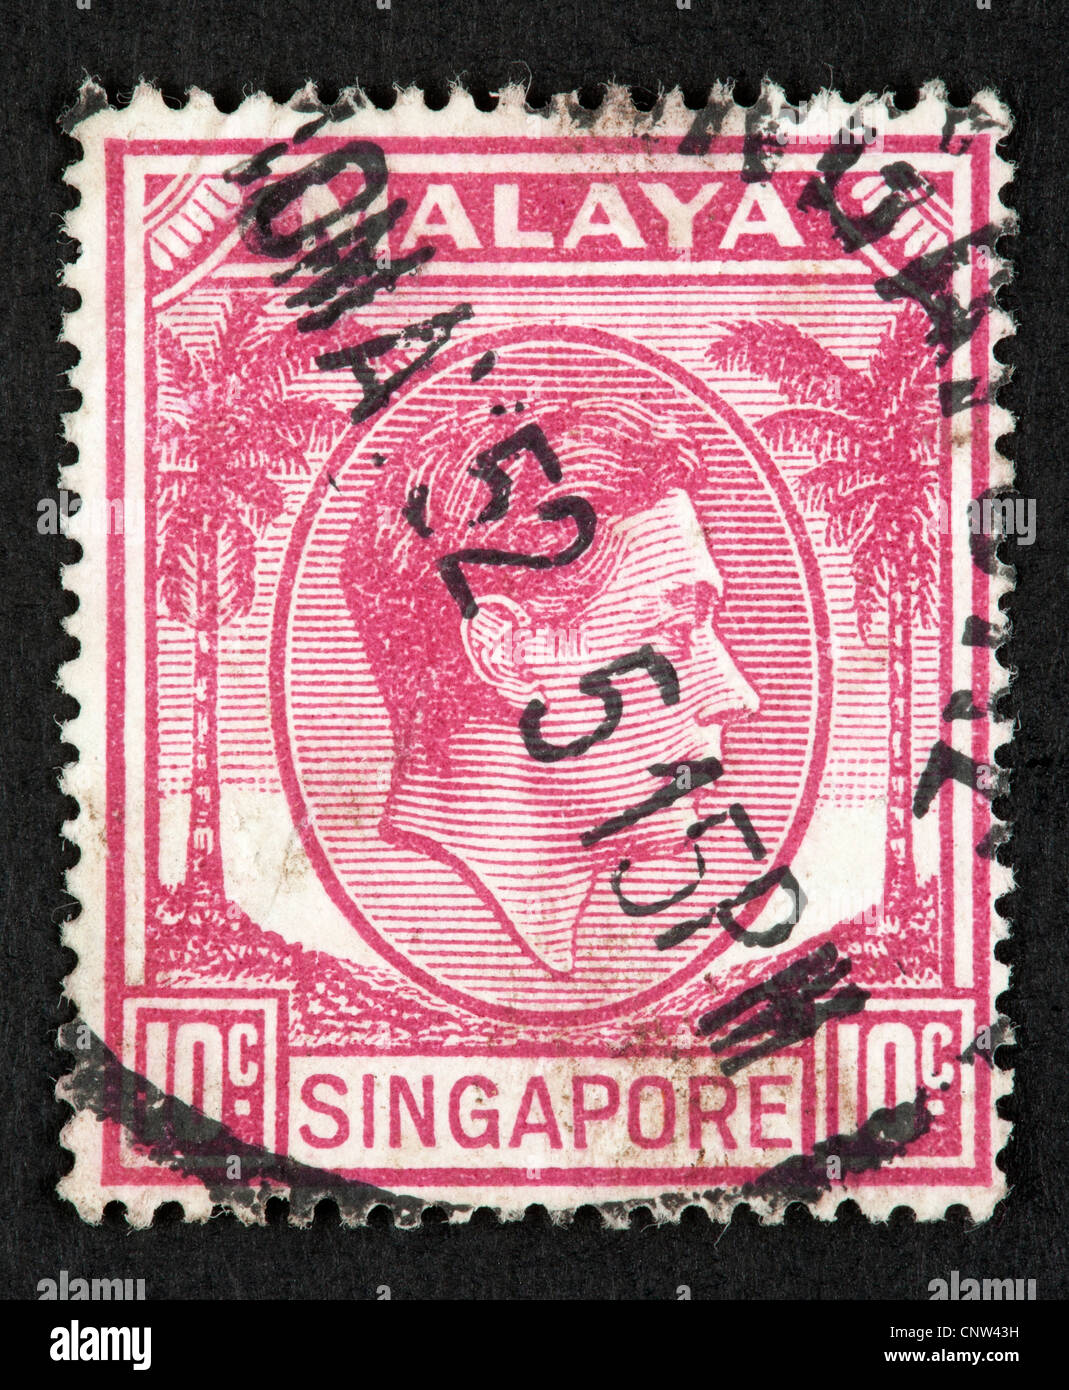 Malaya postage stamp Stock Photo